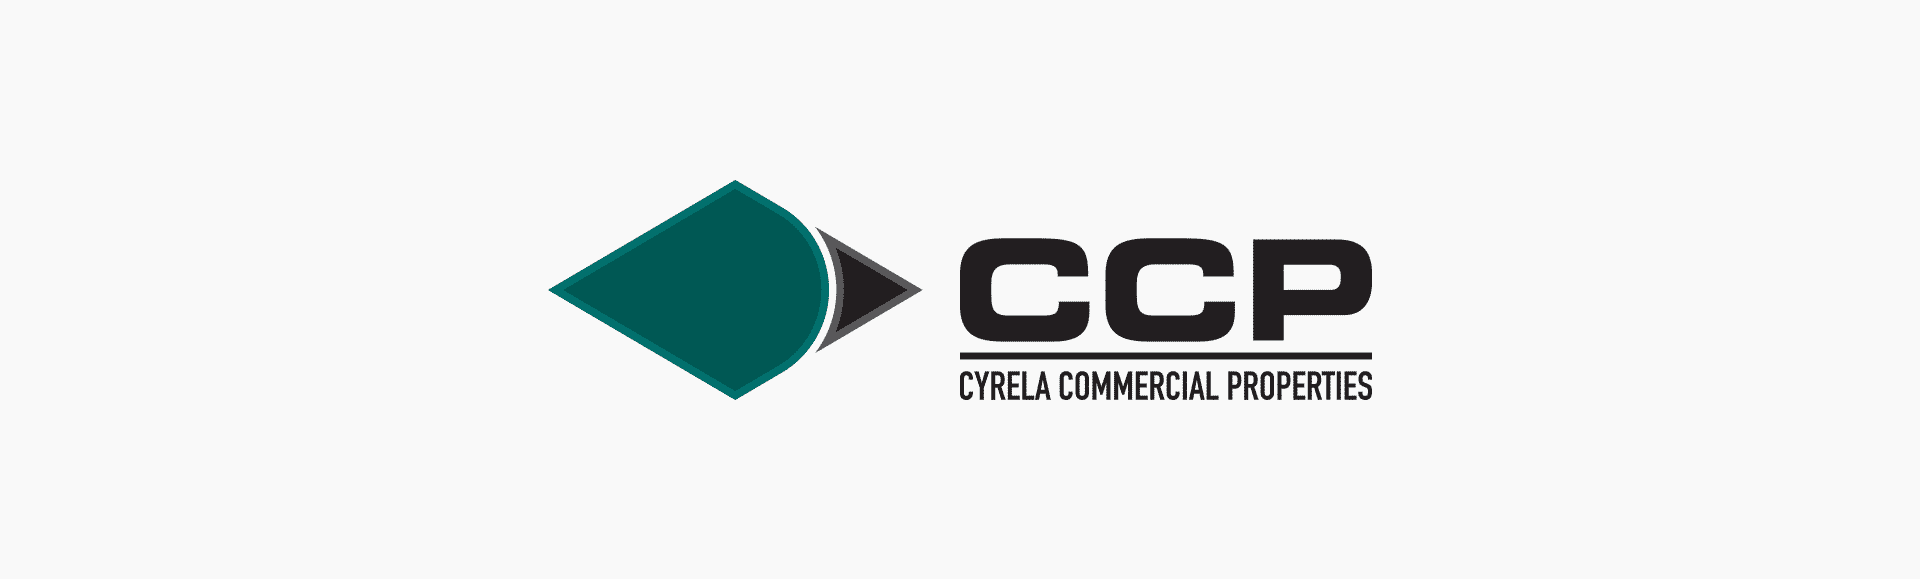 Cyrela Commercial Properties S.A - CCPR3